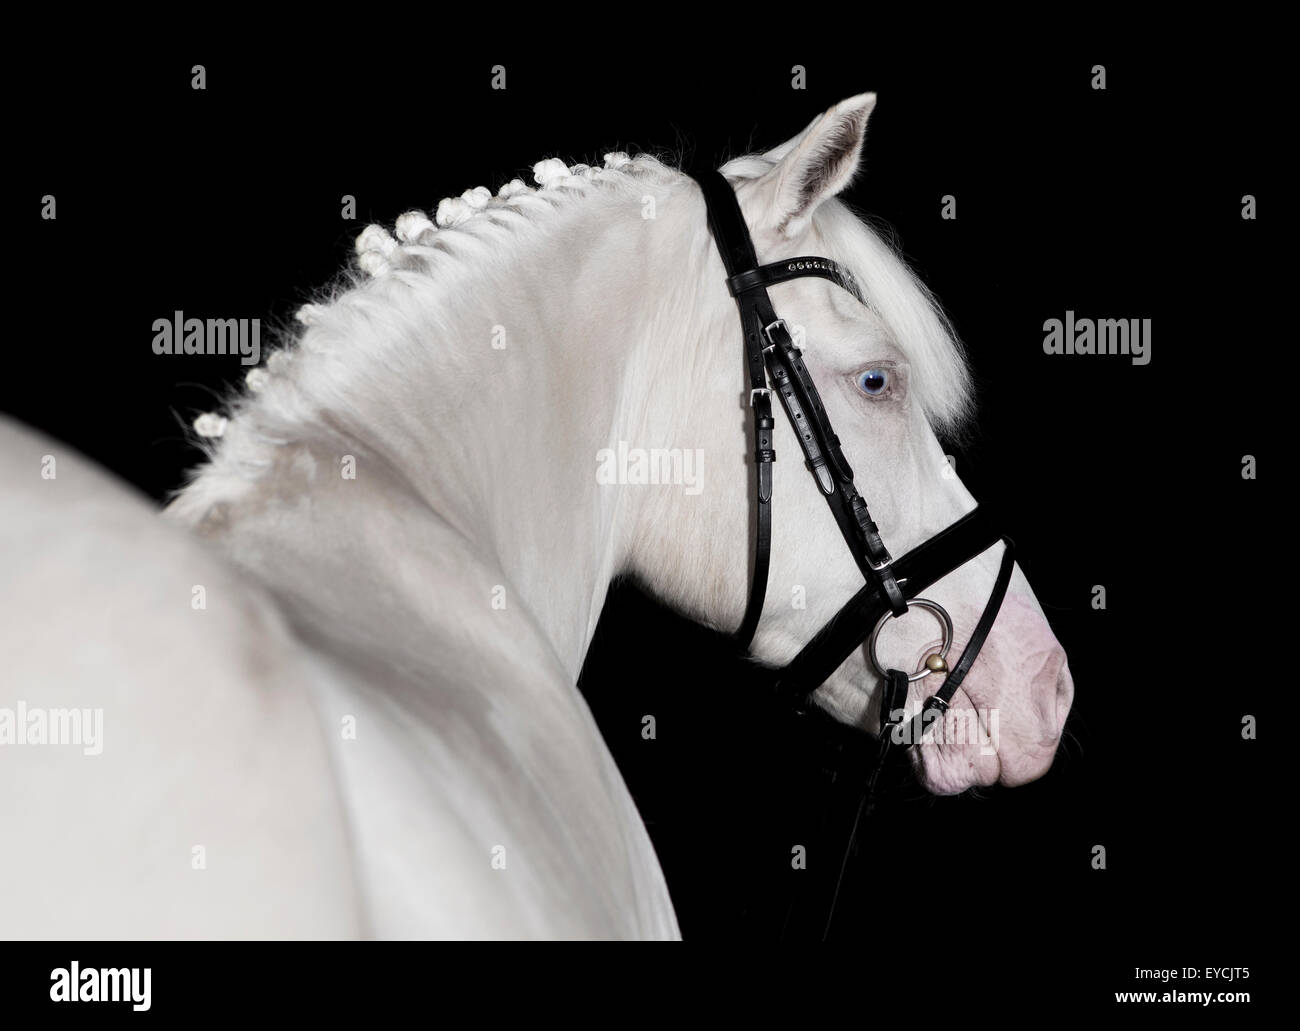 German white pony bridle against a black background, portrait Stock Photo